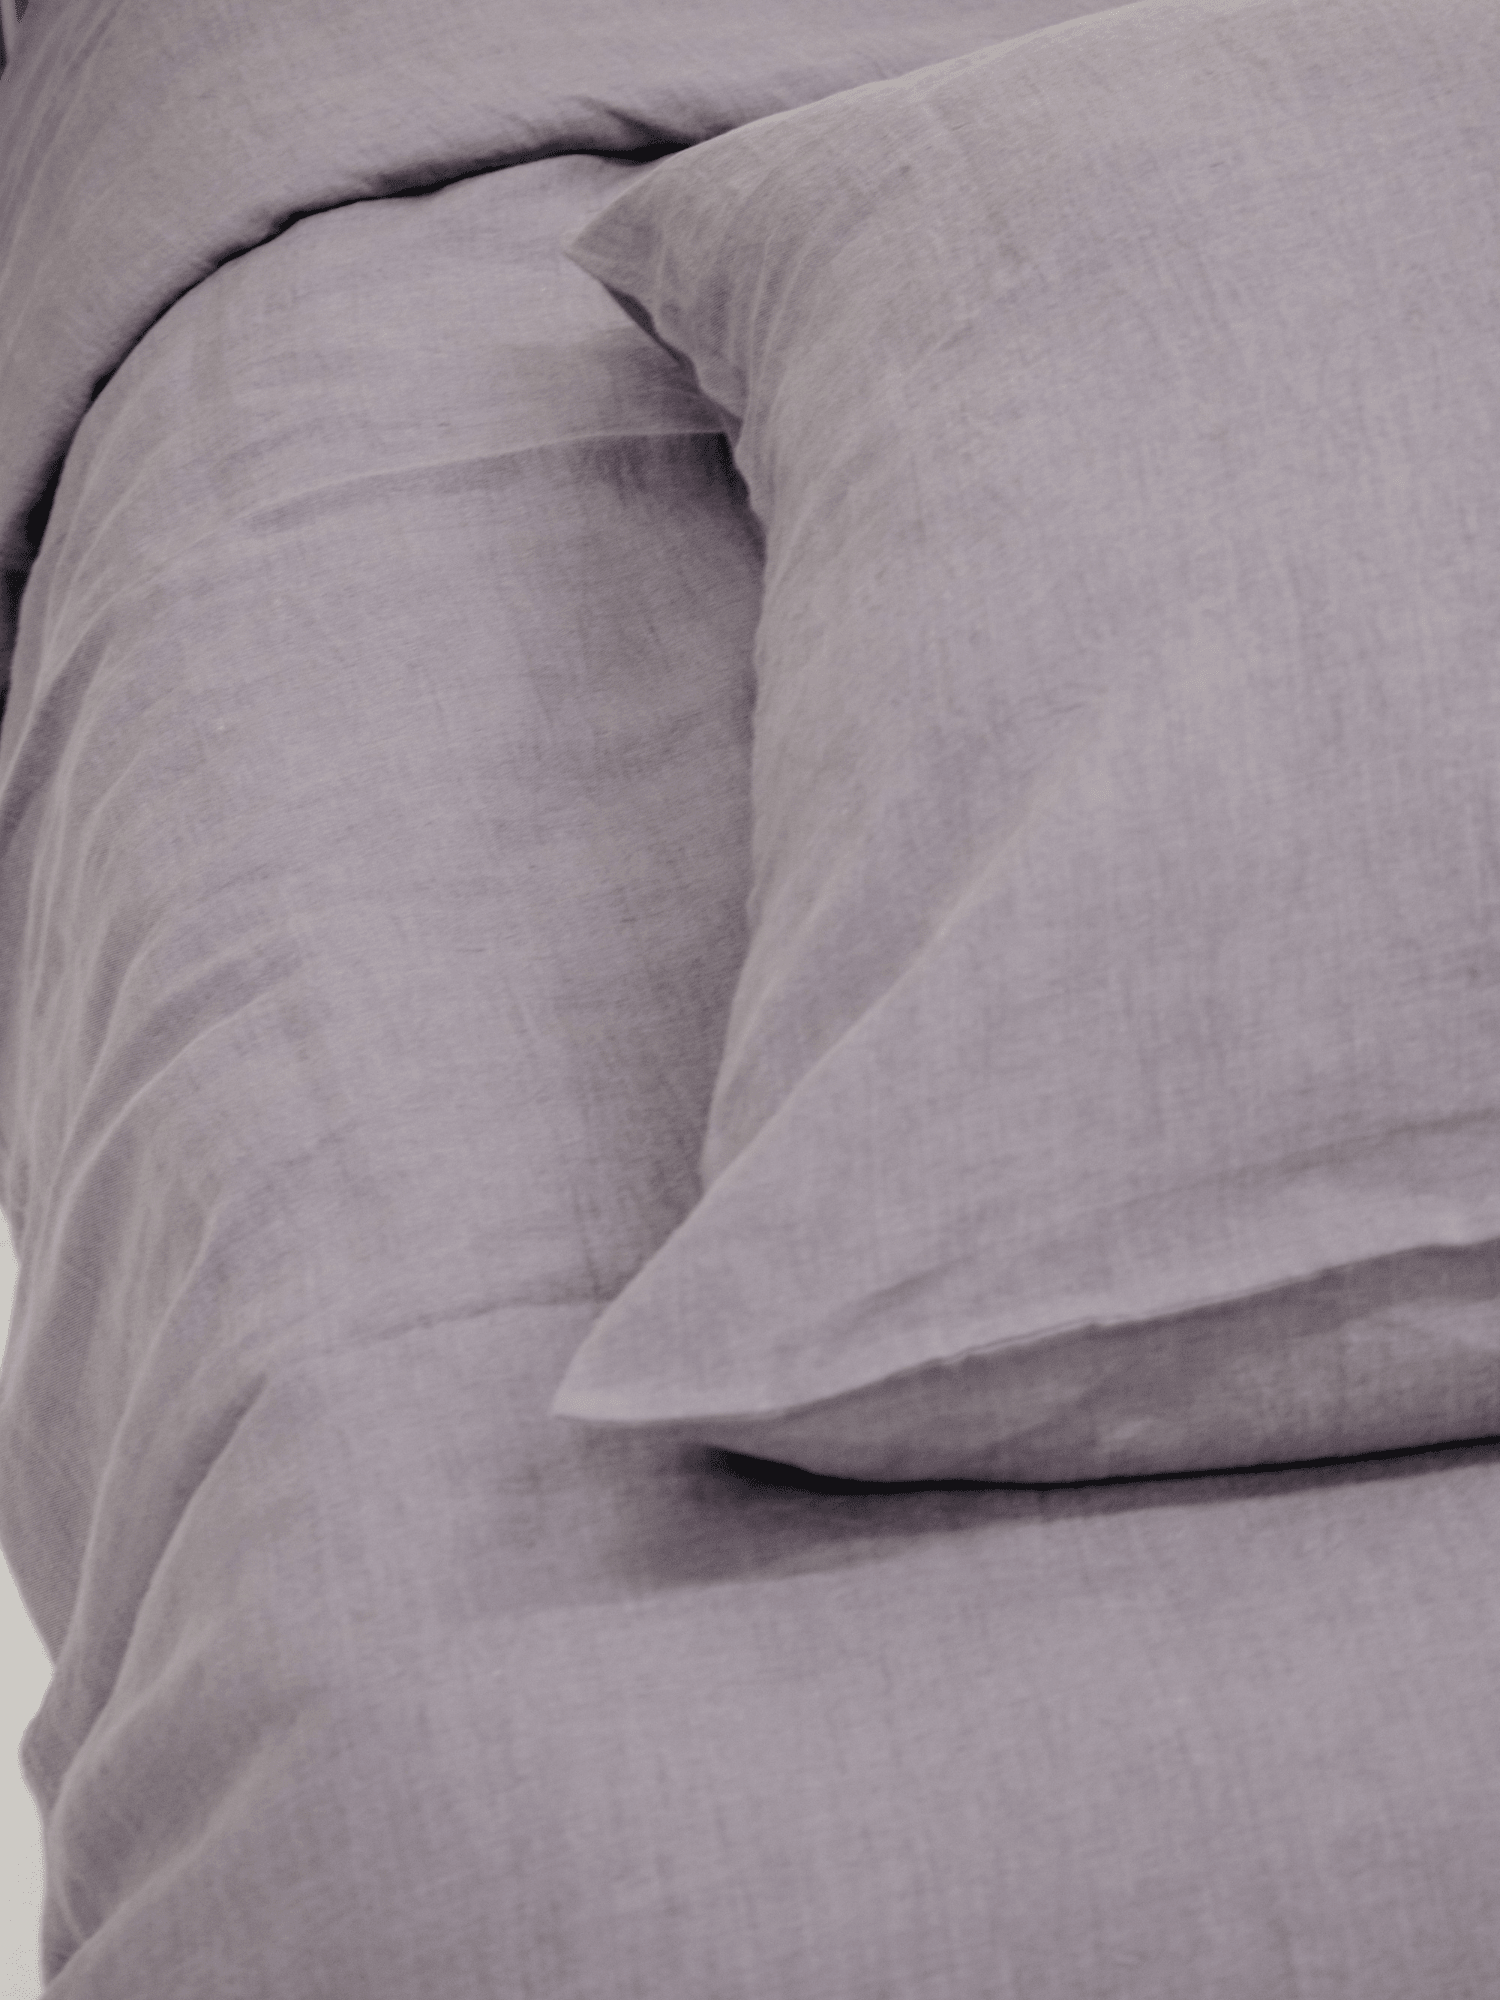 Linen Duvet Cover Set in Perfect Gray (3 items) - Bedroom, Linen duvet cover - FlaxLin Eco Textiles